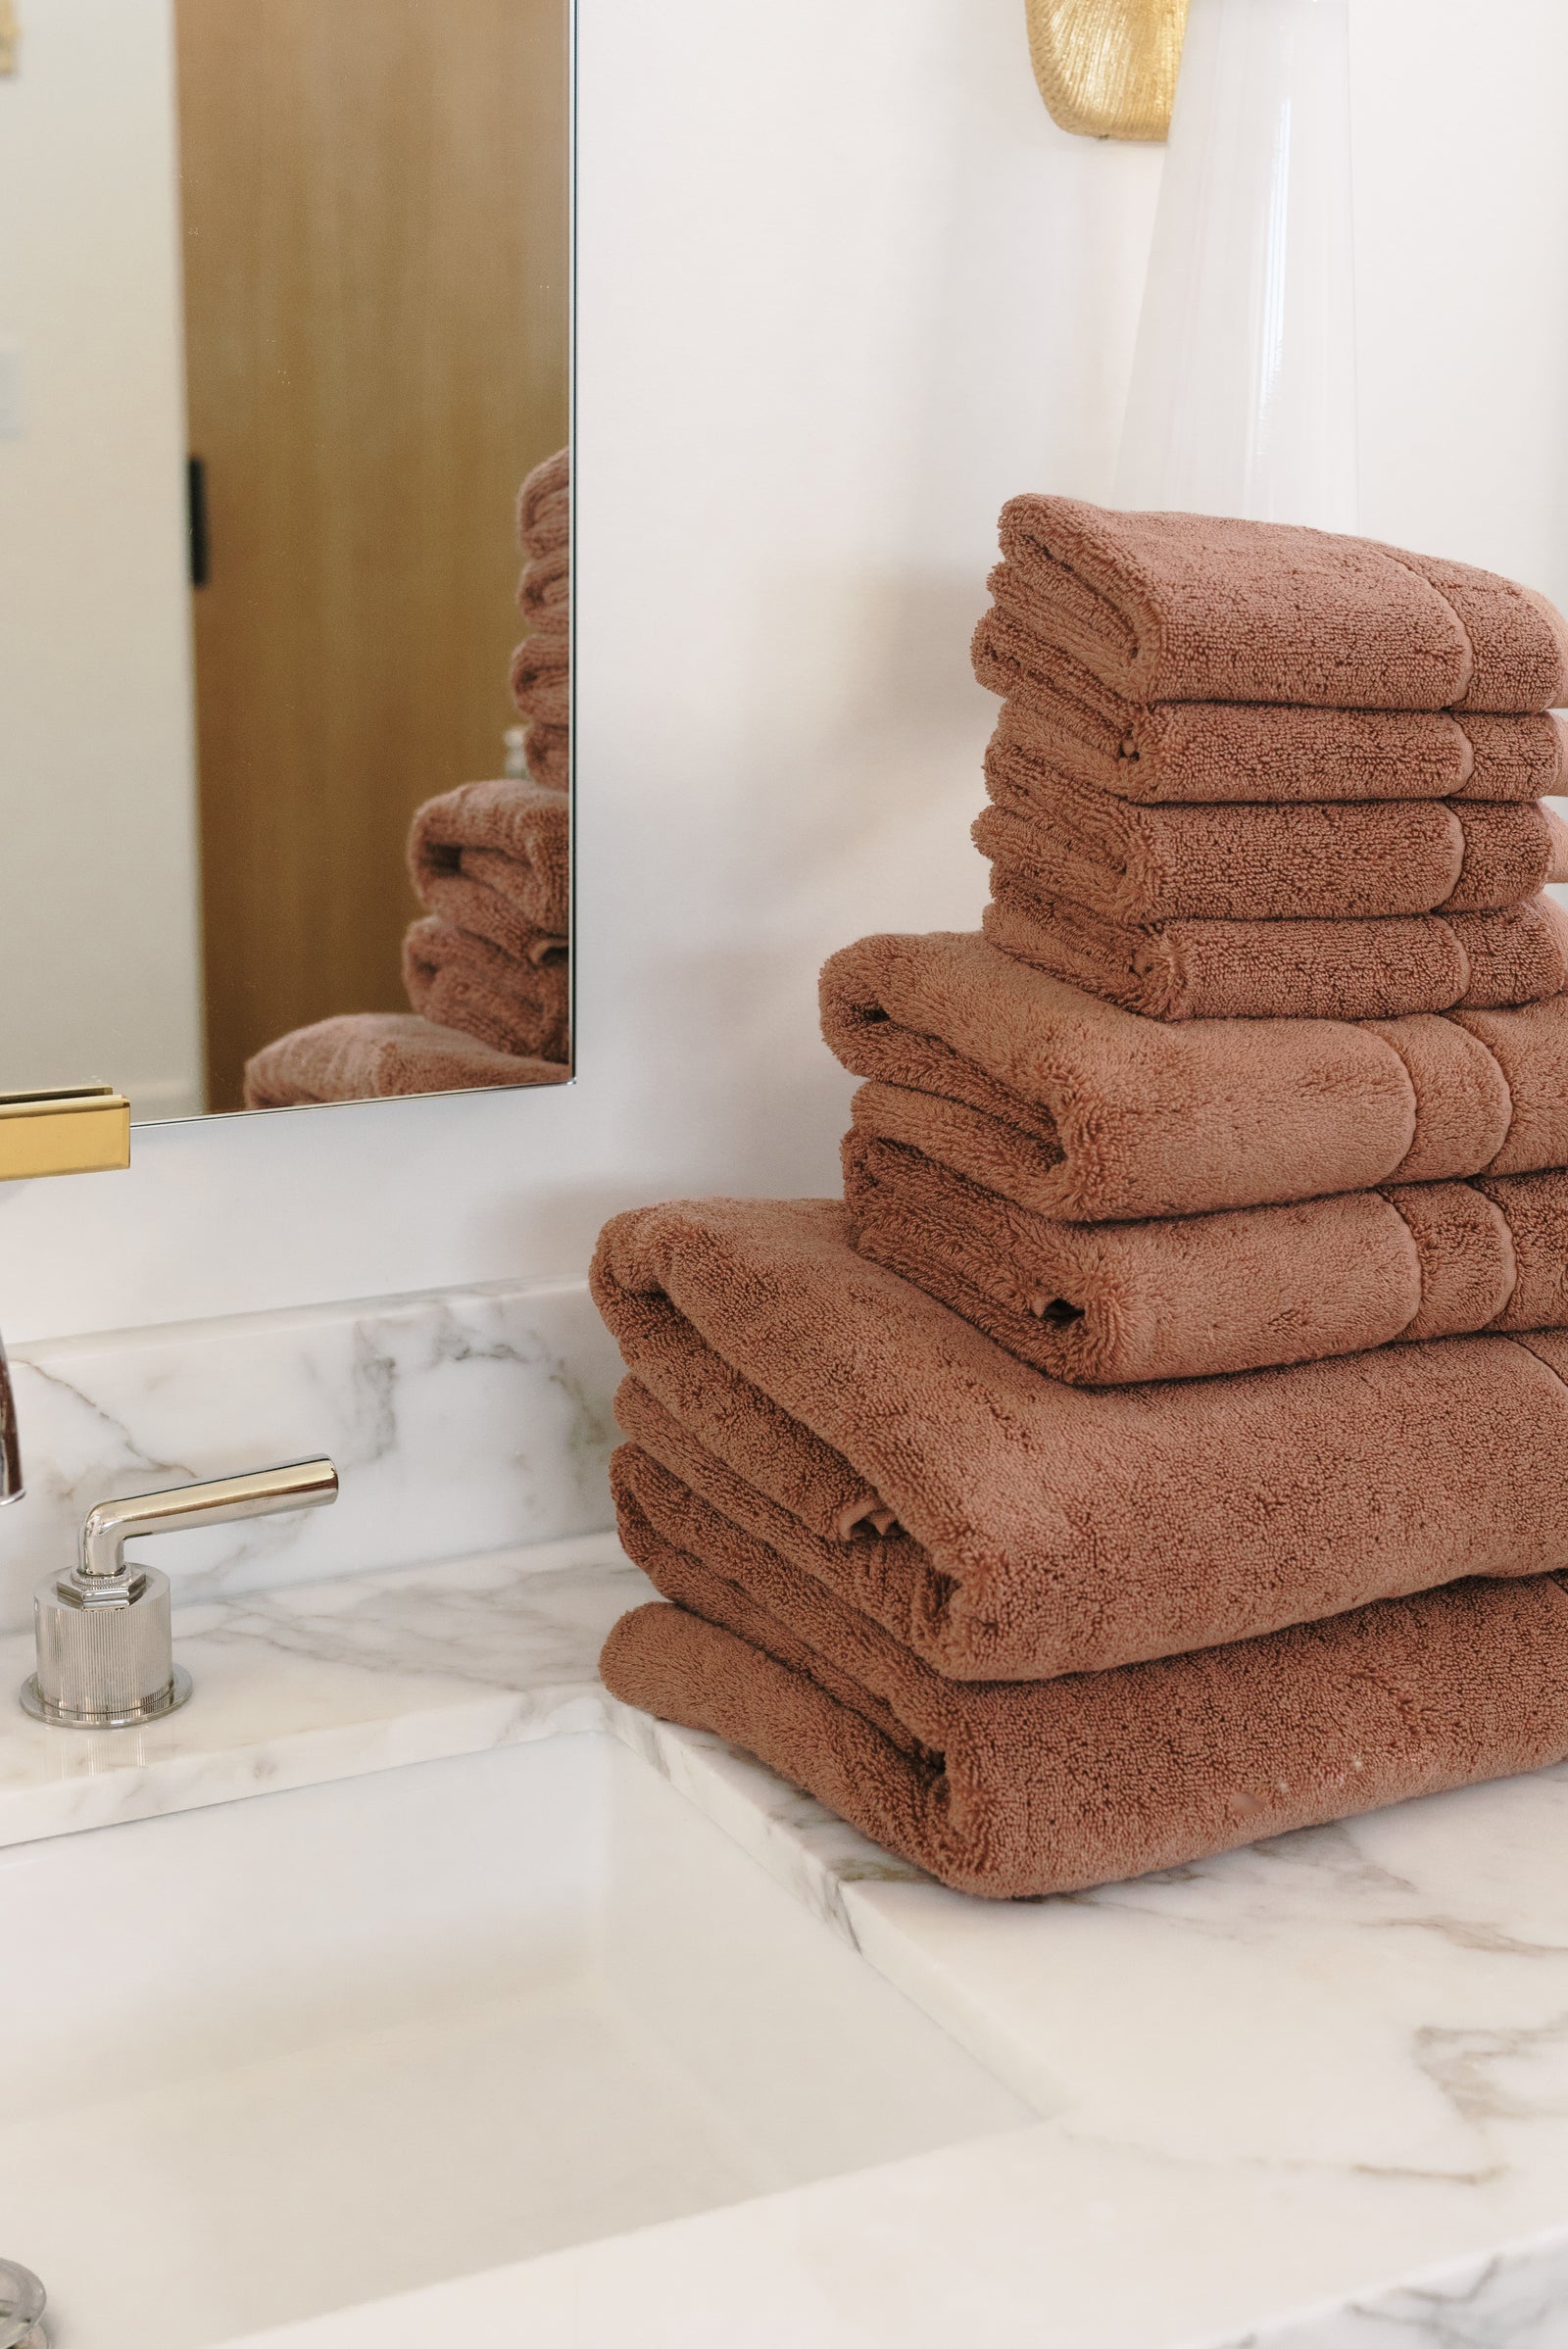 Premium Plush Bath Towel Set in the color Clay. Photo of Clay Premium Plush Bath Towel Set taken in a bathroom featuring white backsplash tile 